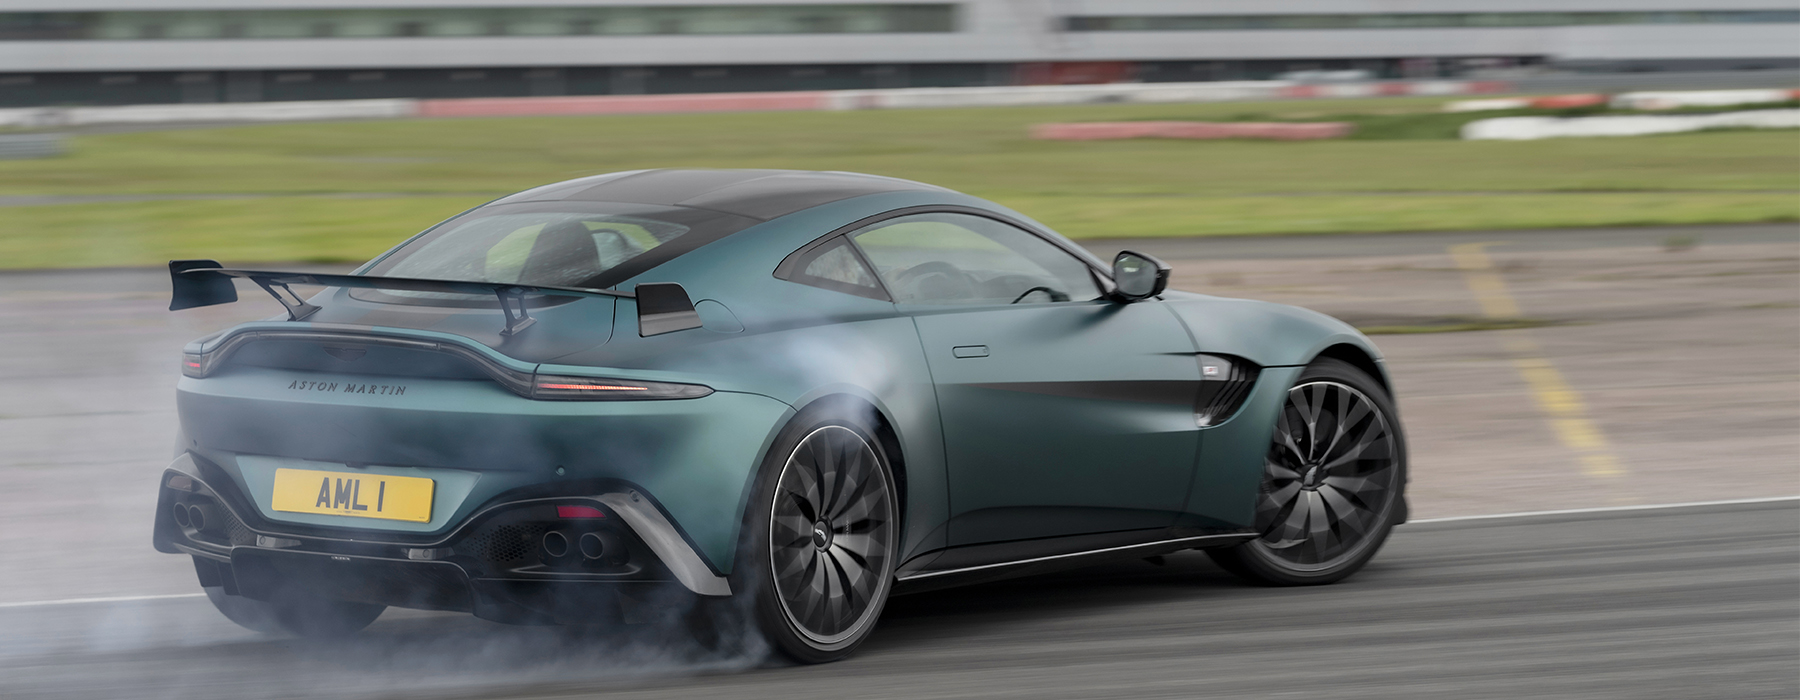 Drive an Aston Martin Vantage